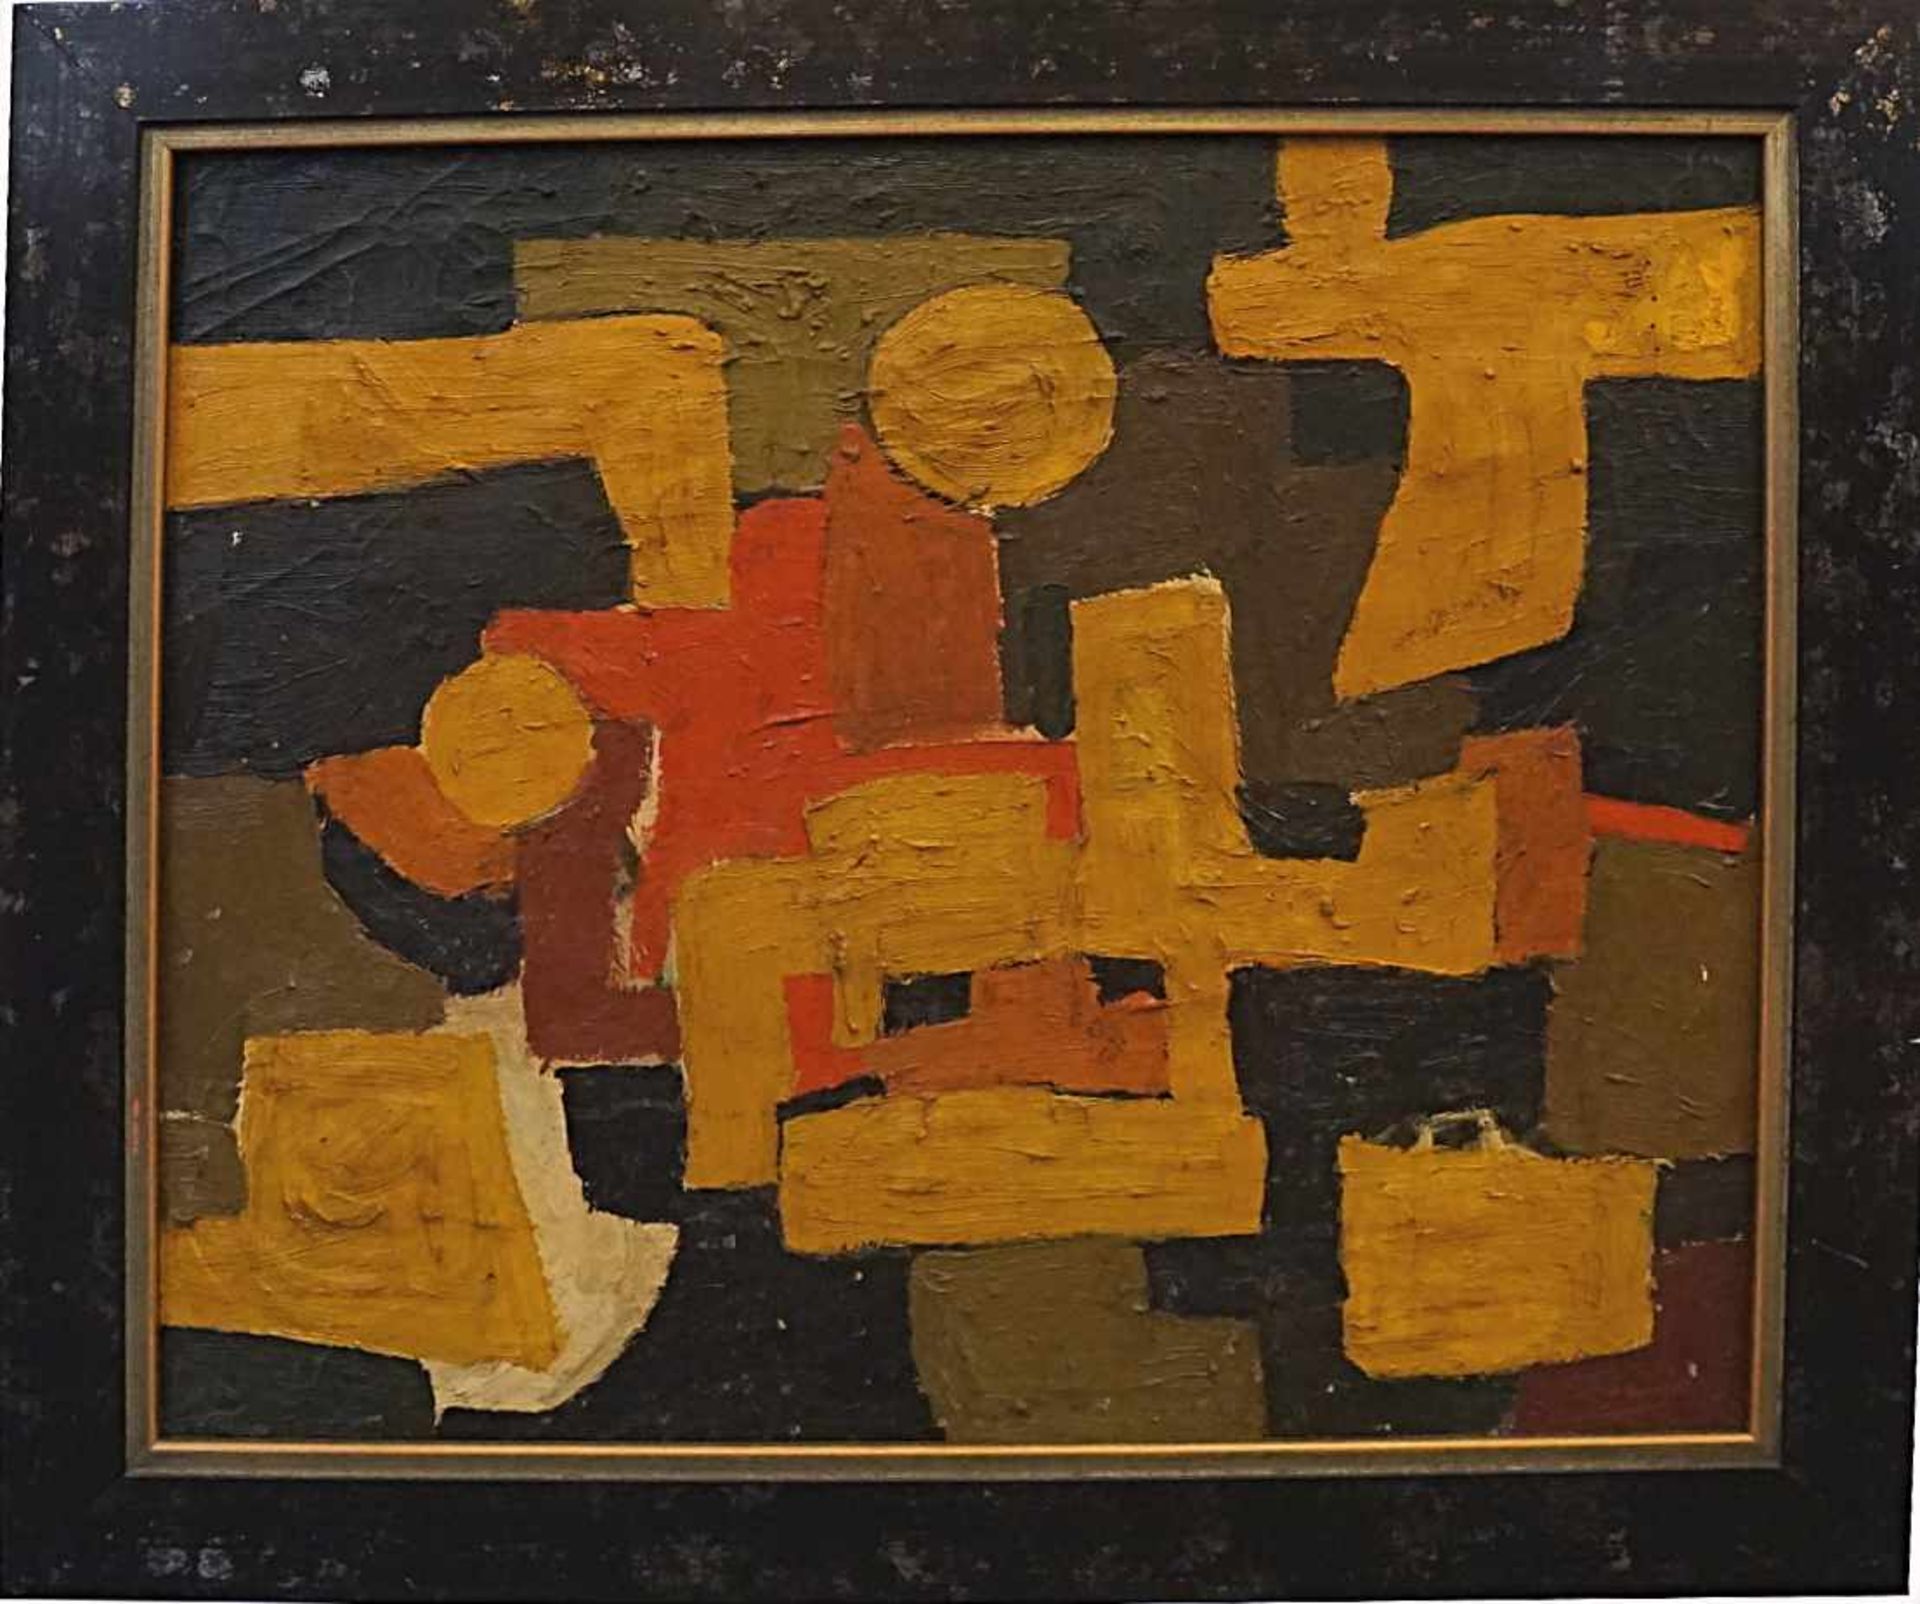 1 Ölgemälde "Abstrakte Komposition" R.u. sign. Serge POLIAKOFF(wohl 1900-1969) Öl/Lwd. ca. 60x70cm - Image 2 of 2